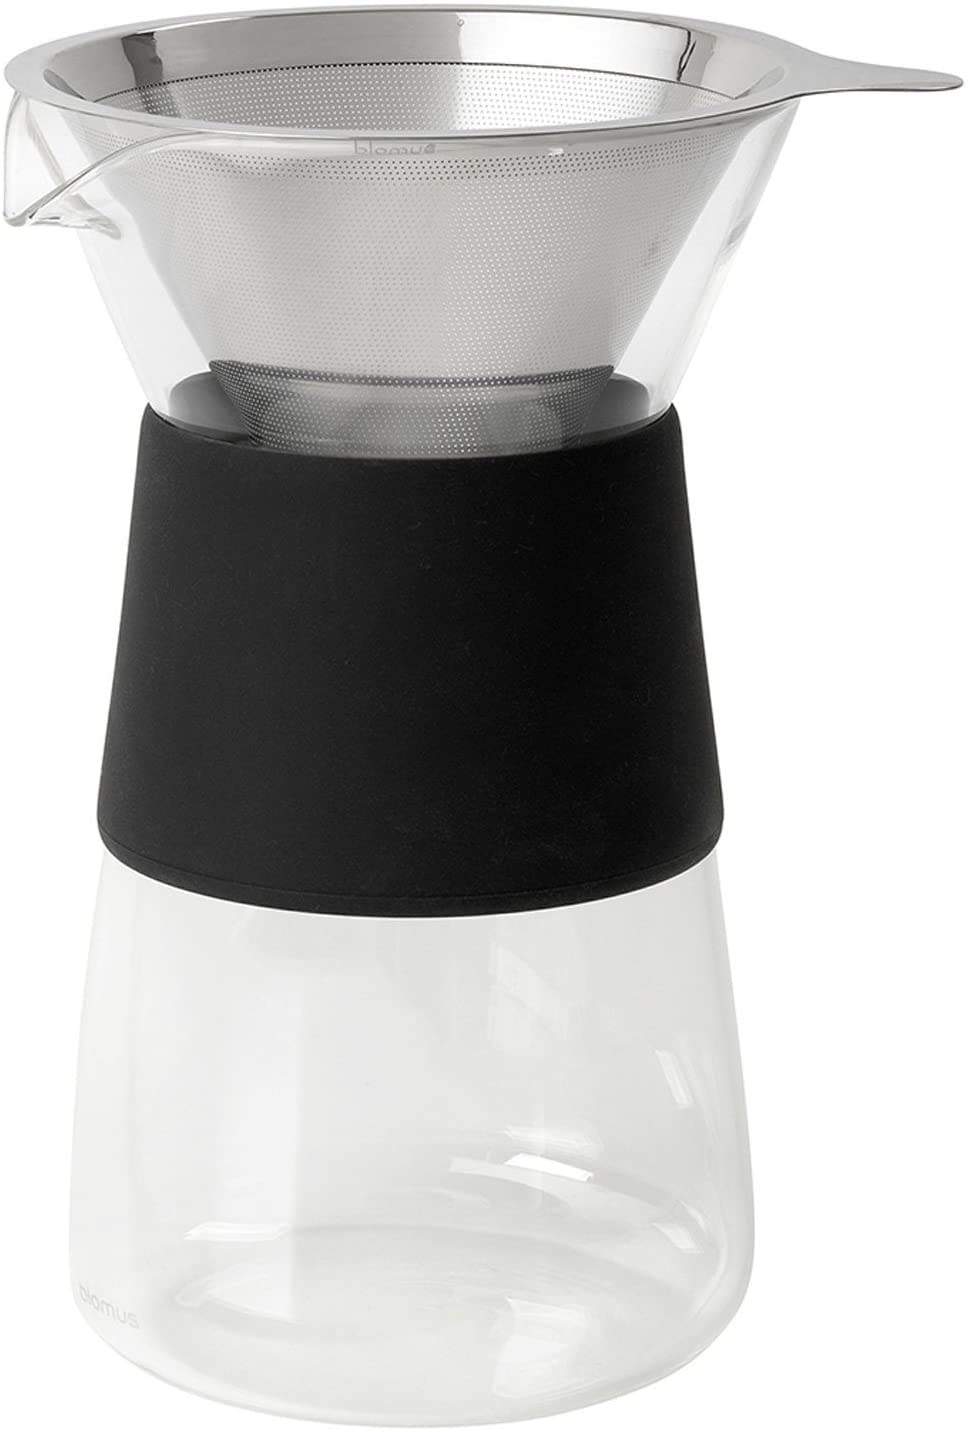 Blomus 63691 Coffee Maker Glass